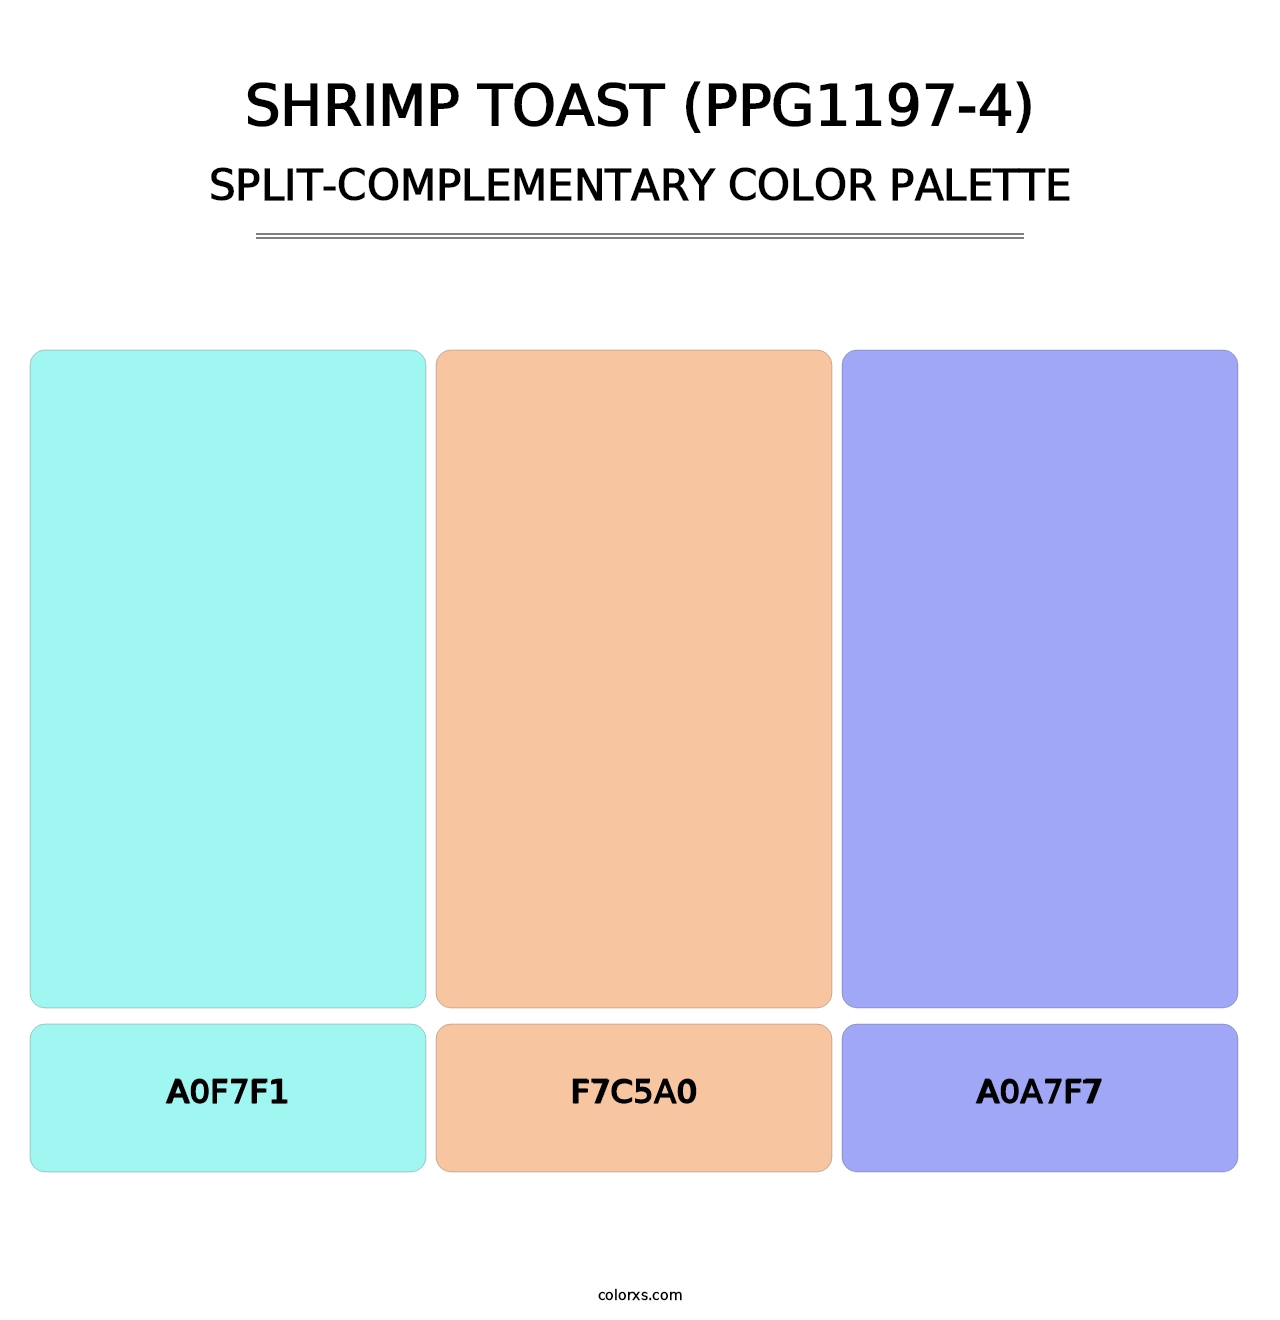 Shrimp Toast (PPG1197-4) - Split-Complementary Color Palette